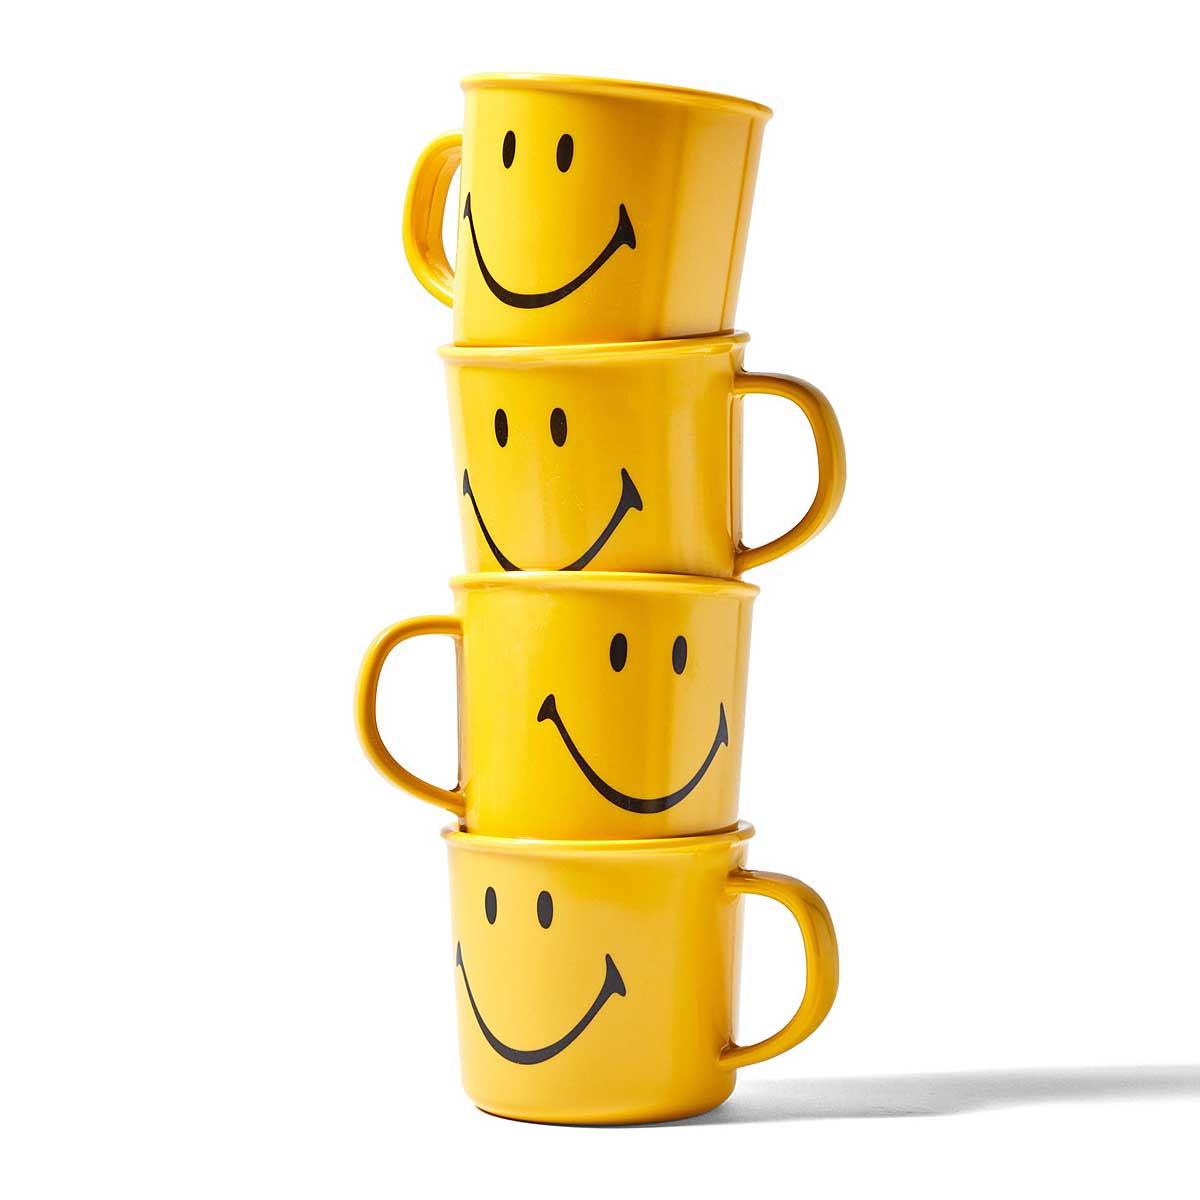 Market Smiley Mug 4 Piece Set, Yellow